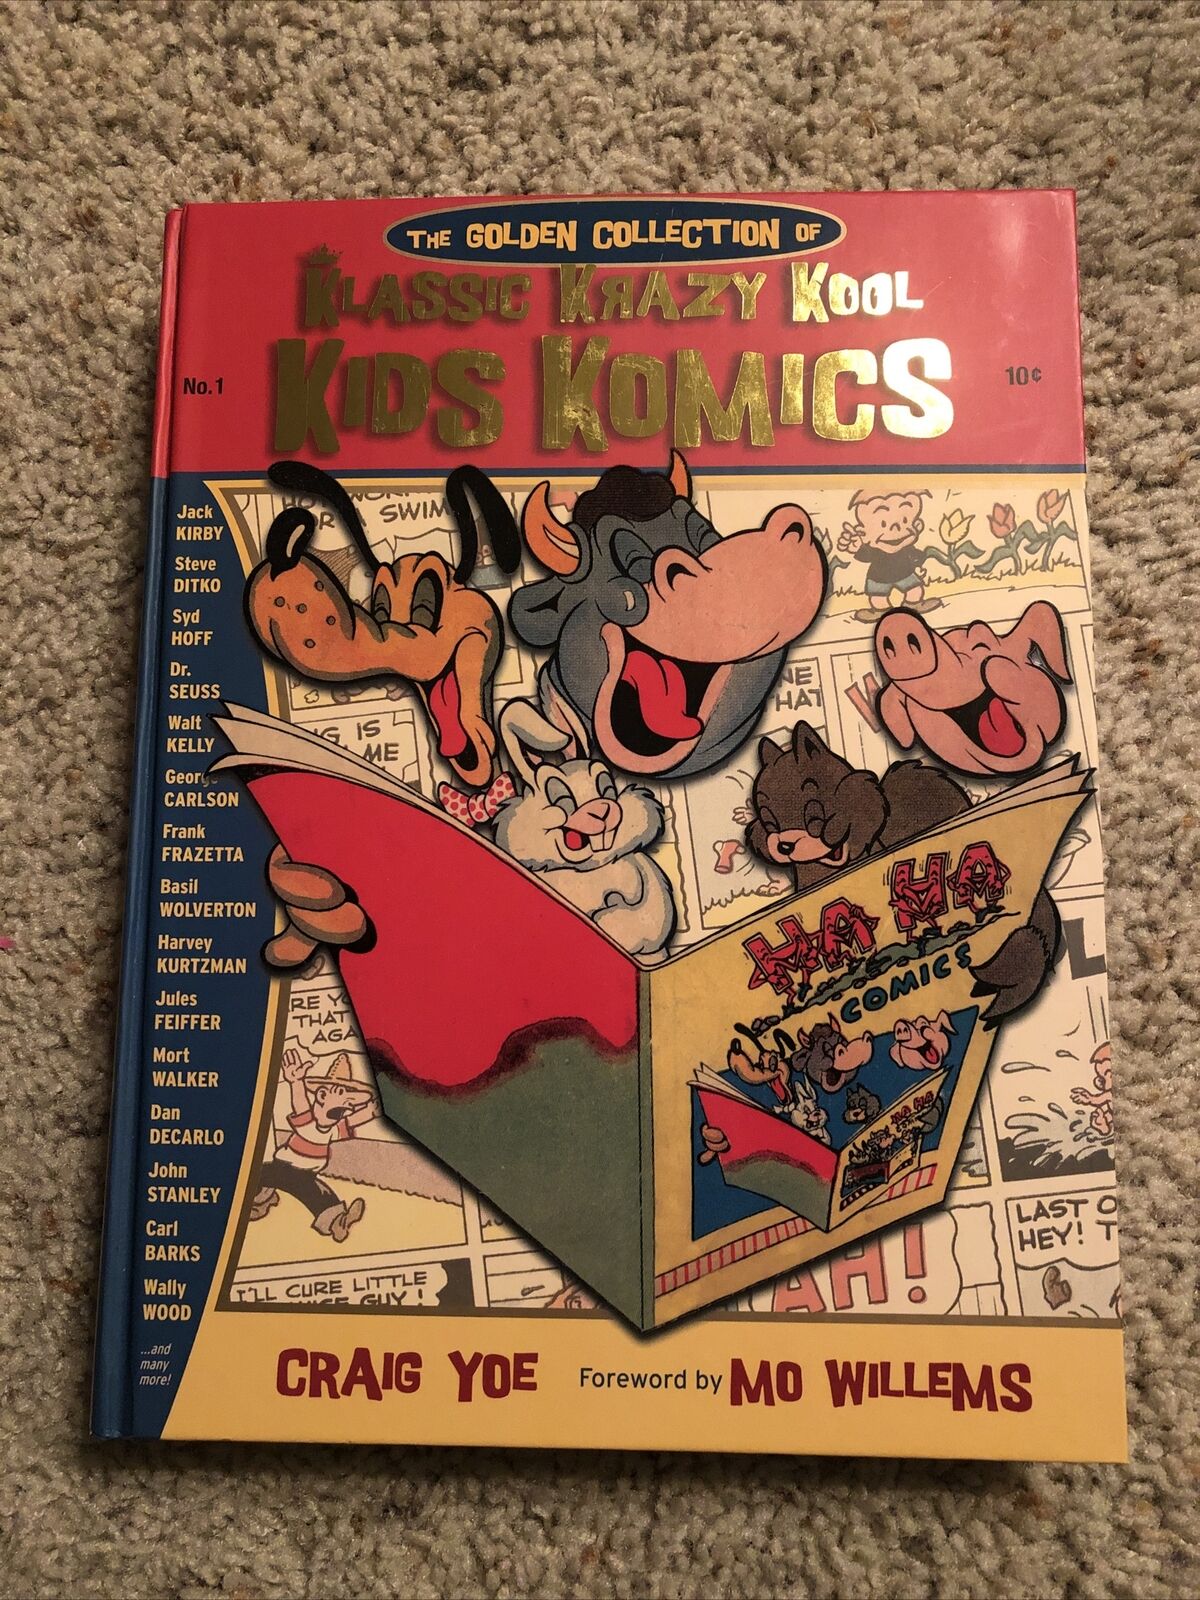 The Golden Collection of Klassic Krazy Kool Kids Komics No 1. by Craig Yoe